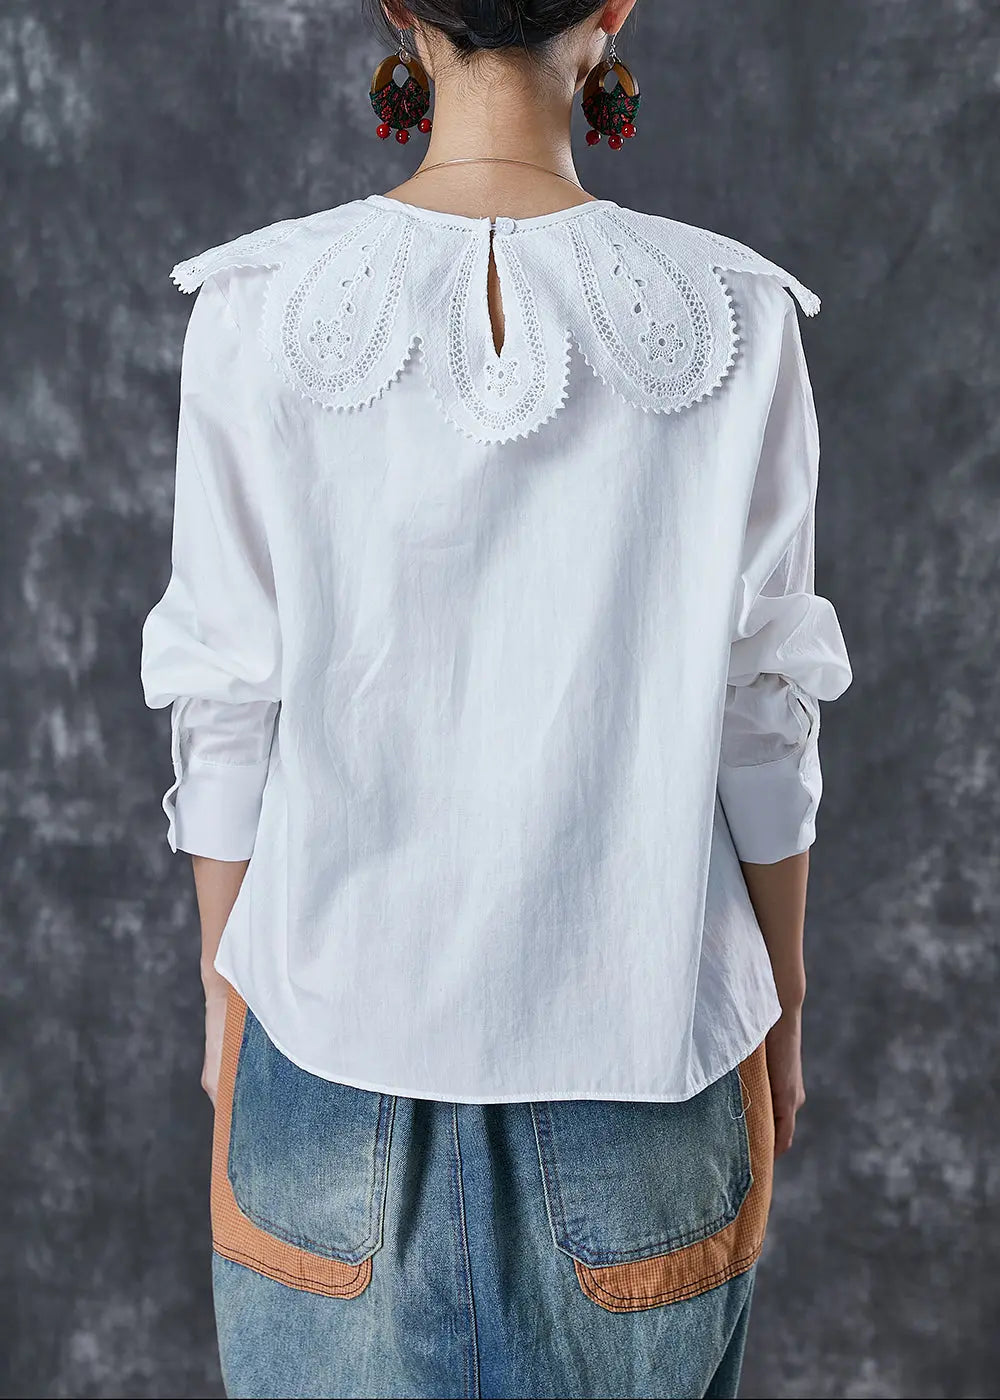 Art White O-Neck Lace Patchwork Cotton Shirt Top Fall Ada Fashion